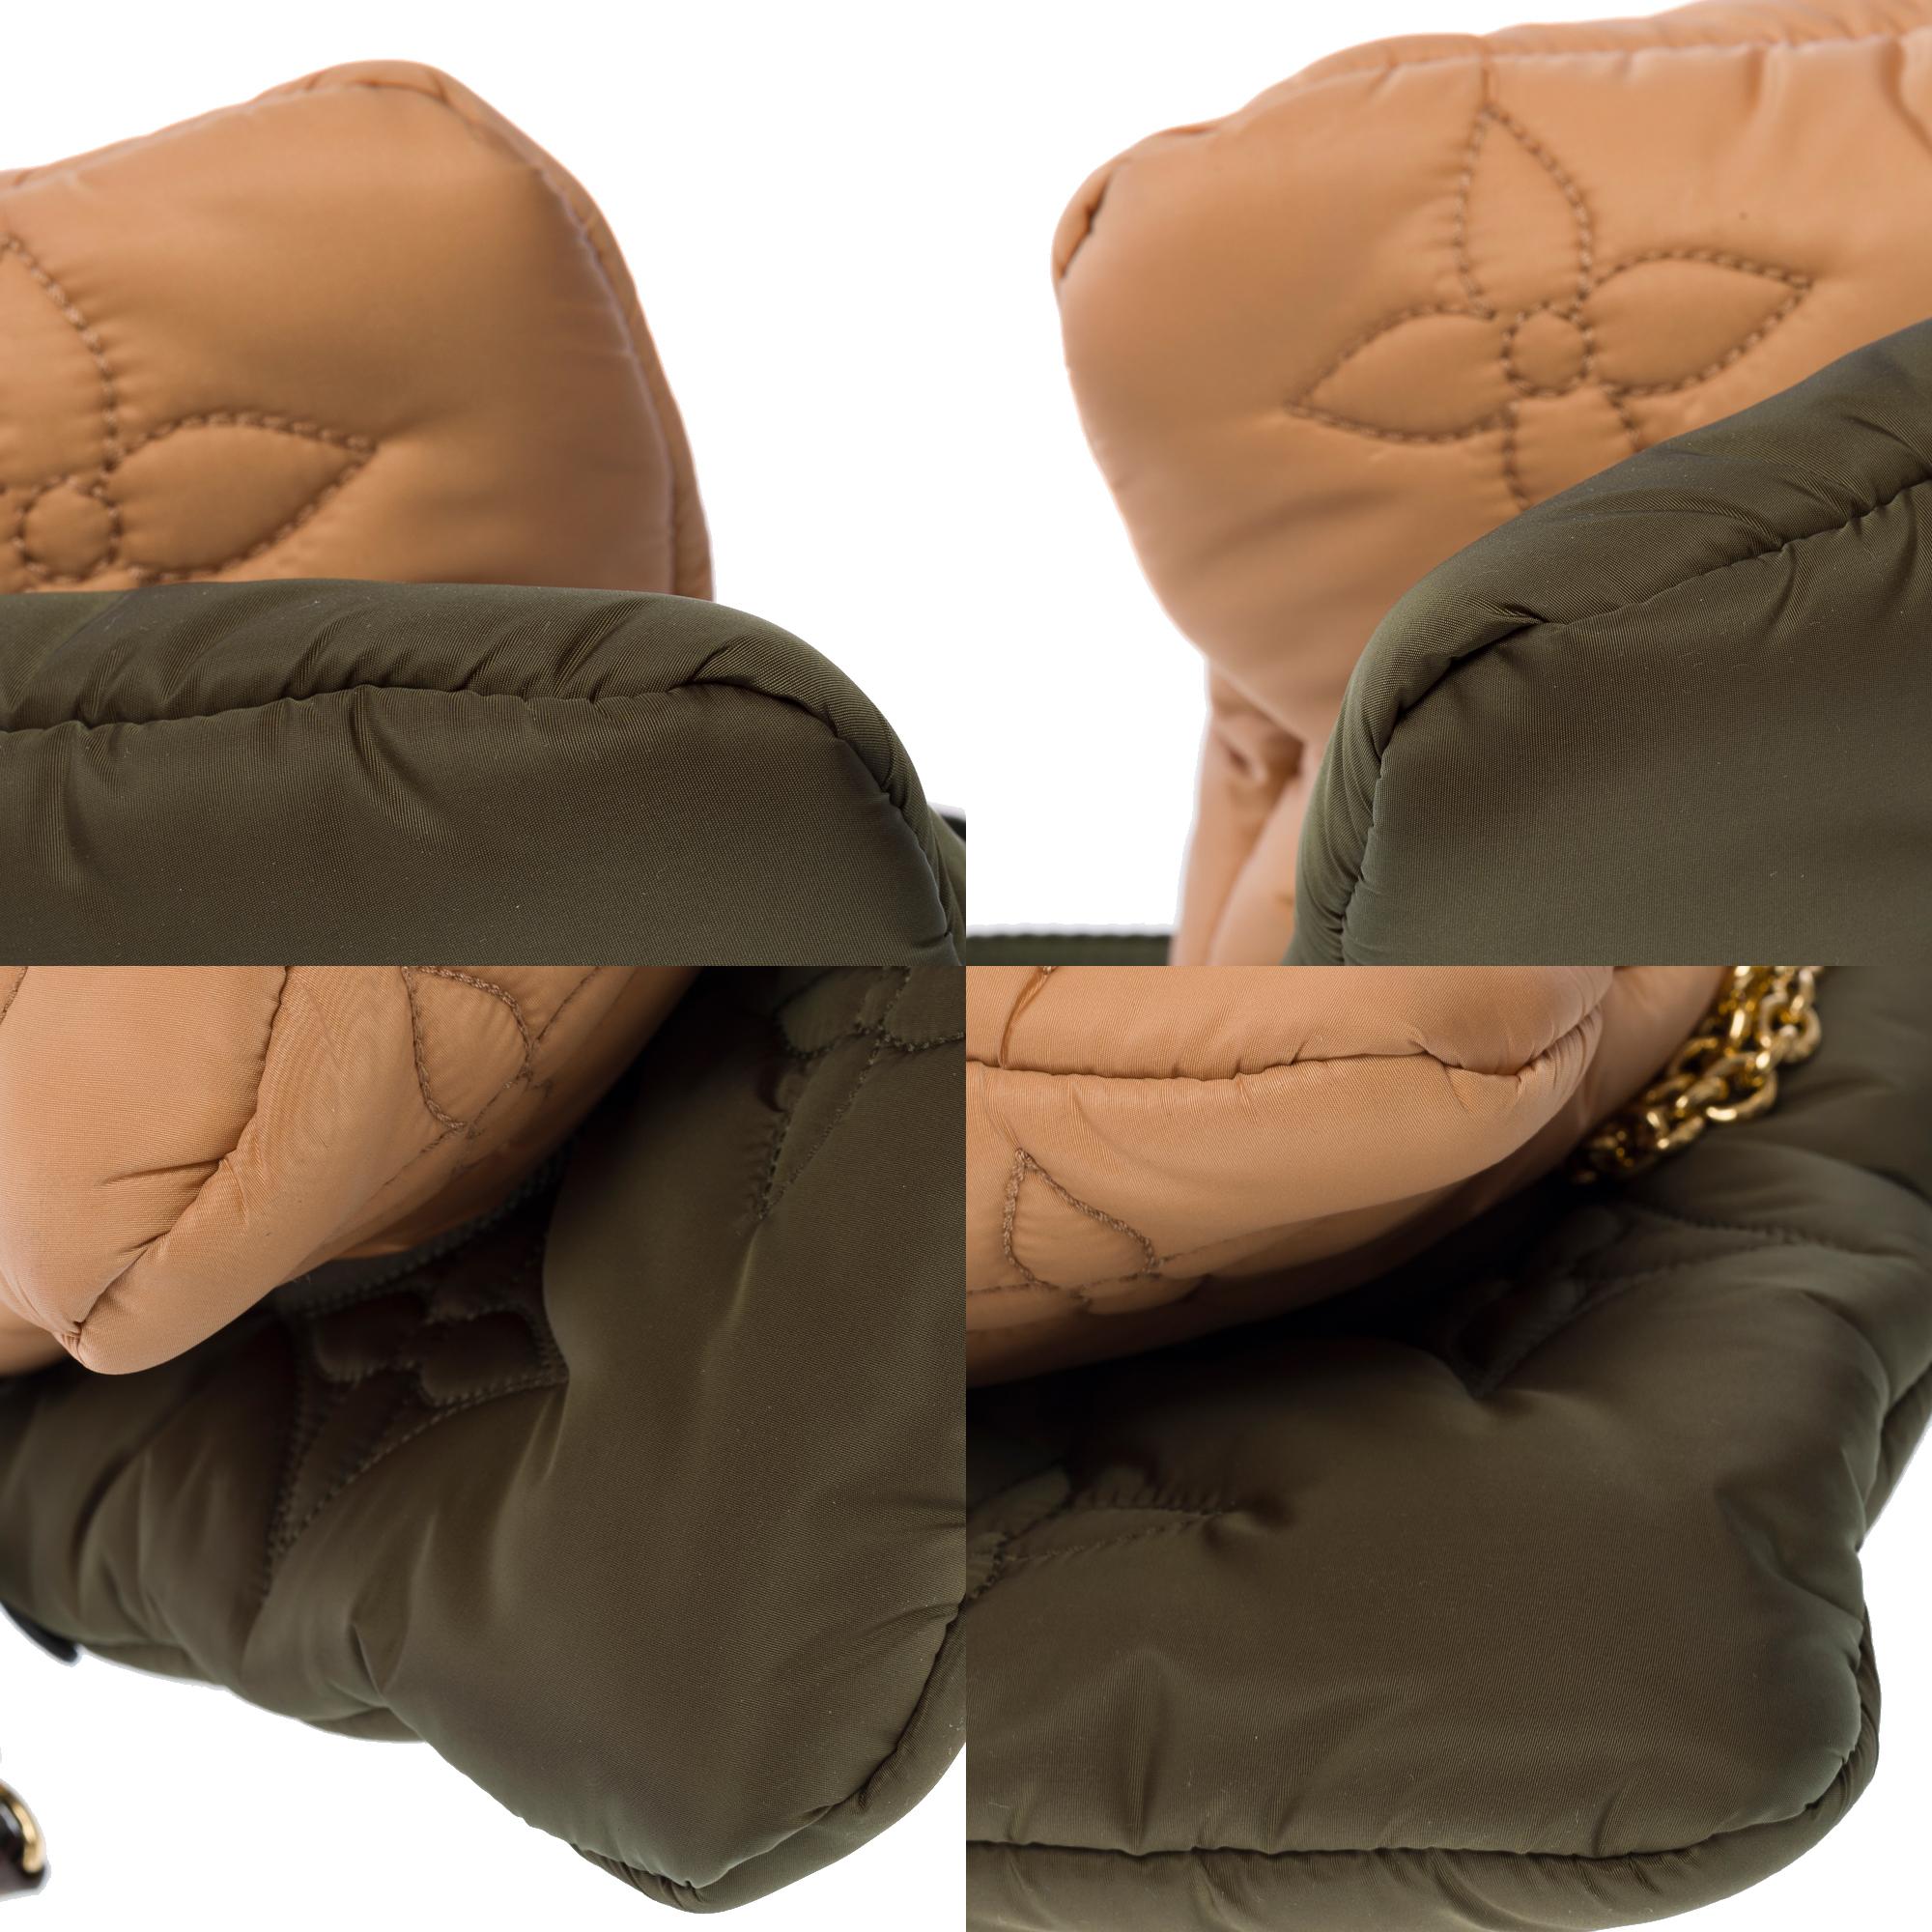 New Louis Vuitton Pillow Maxi Pochette shoulder bag in khaki/Beige nylon, GHW For Sale 8